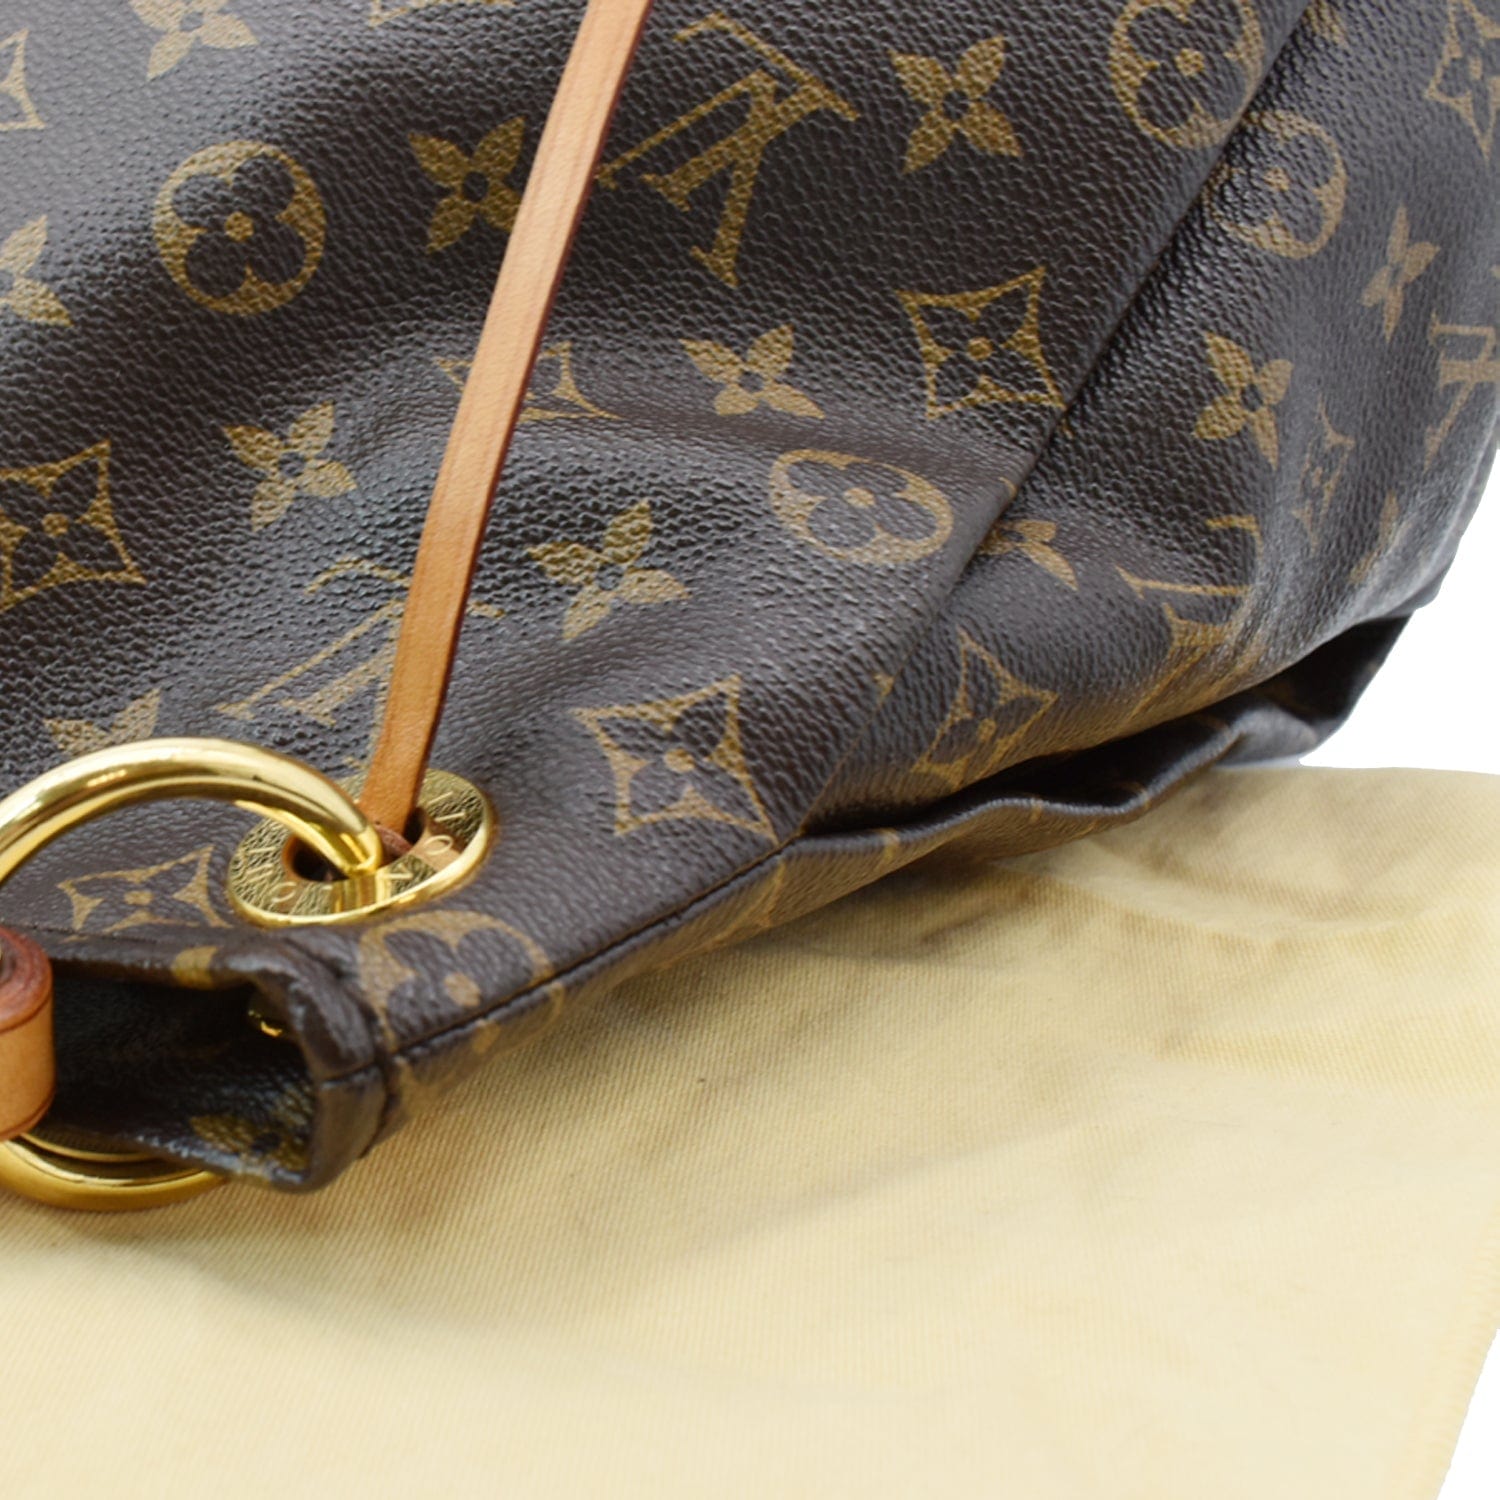 Pre-owned Louis Vuitton 2010 Monogram Artsy Mm Handbag In Brown